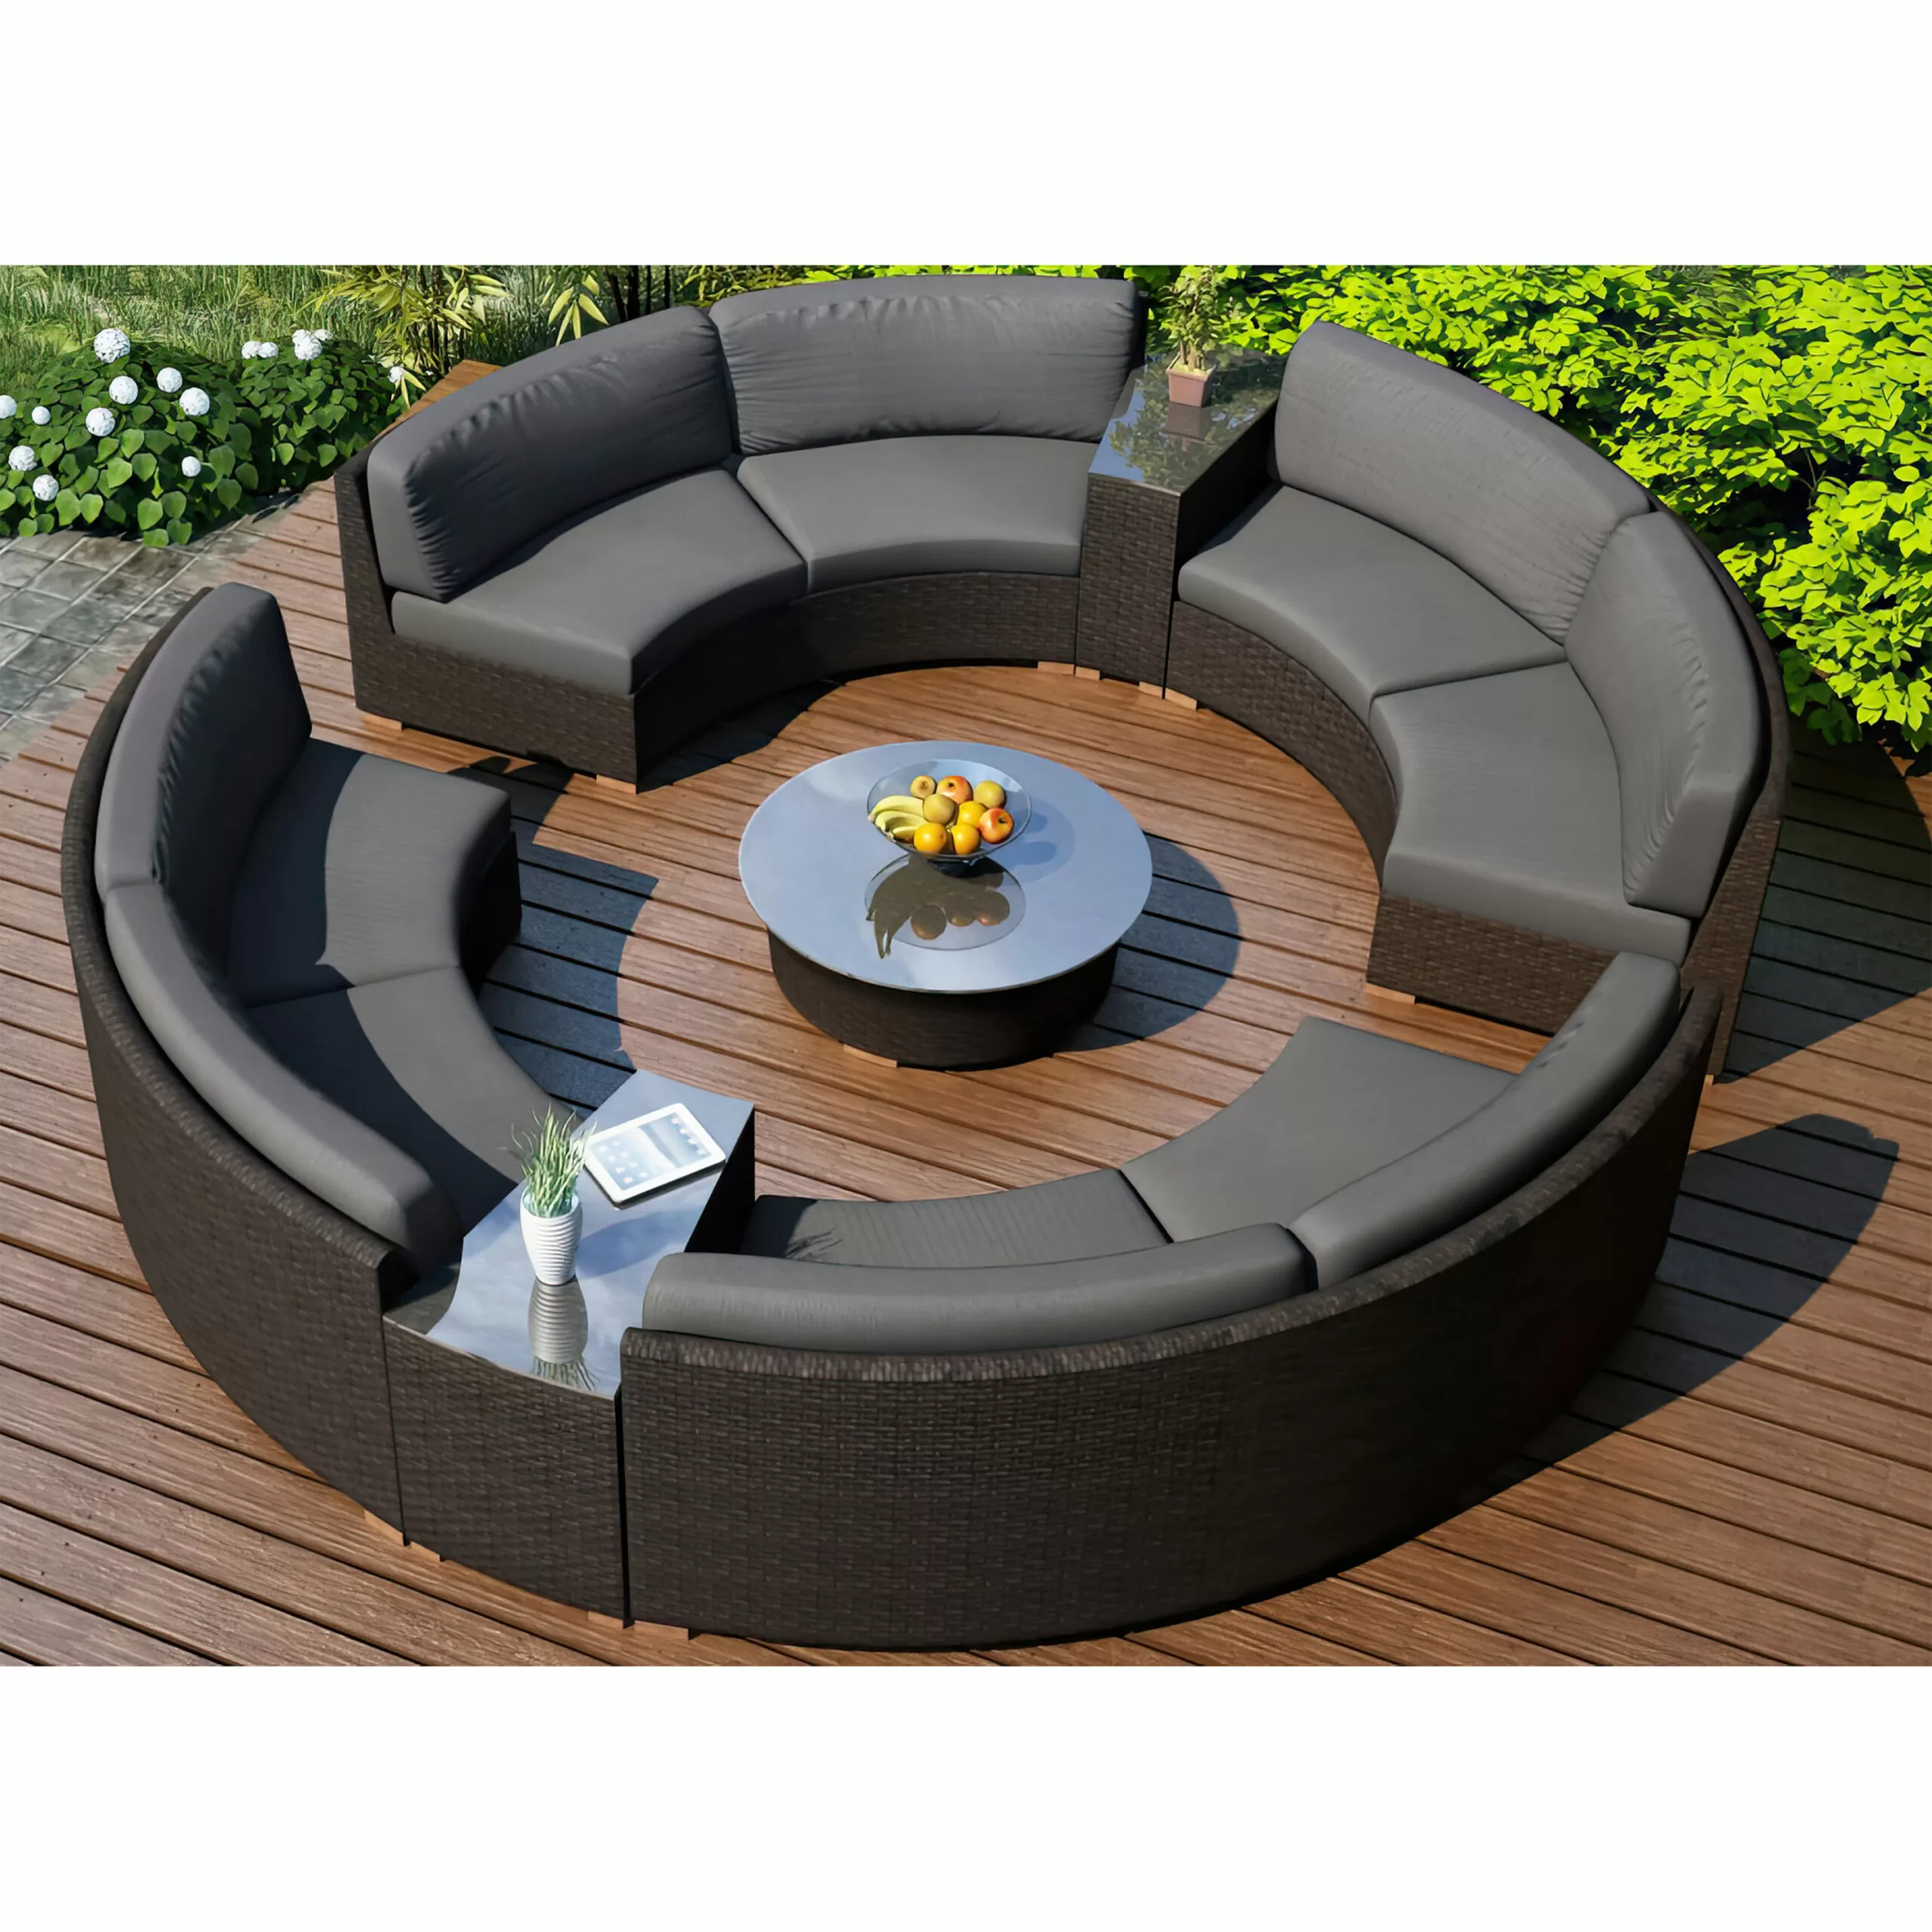 arden eclipse sectional set outdoor patio furniture wicker modern design